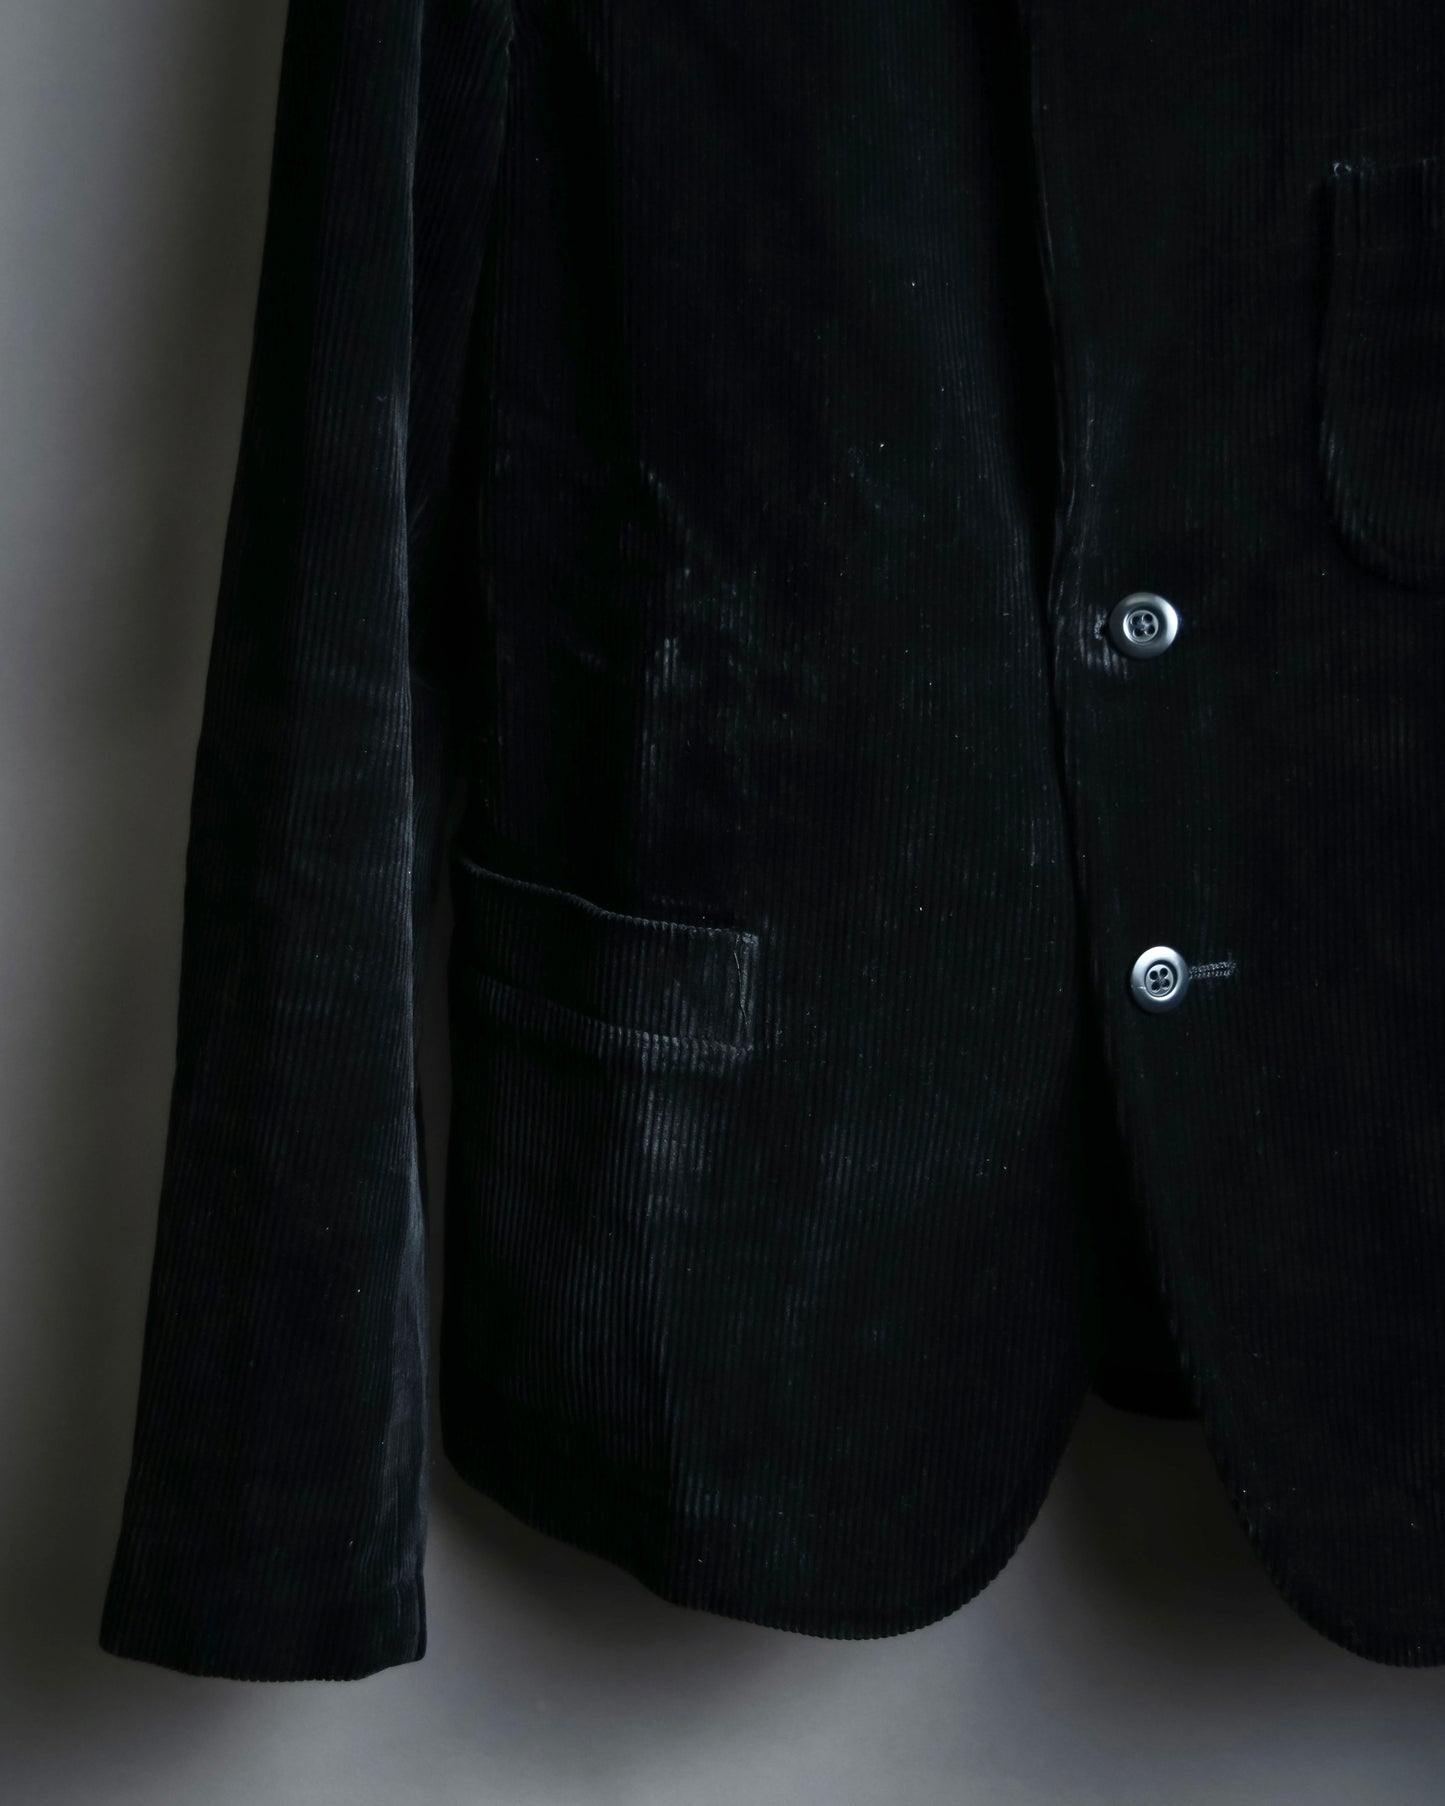 “Y’s for men” beautiful black corduroy single tailored jacket